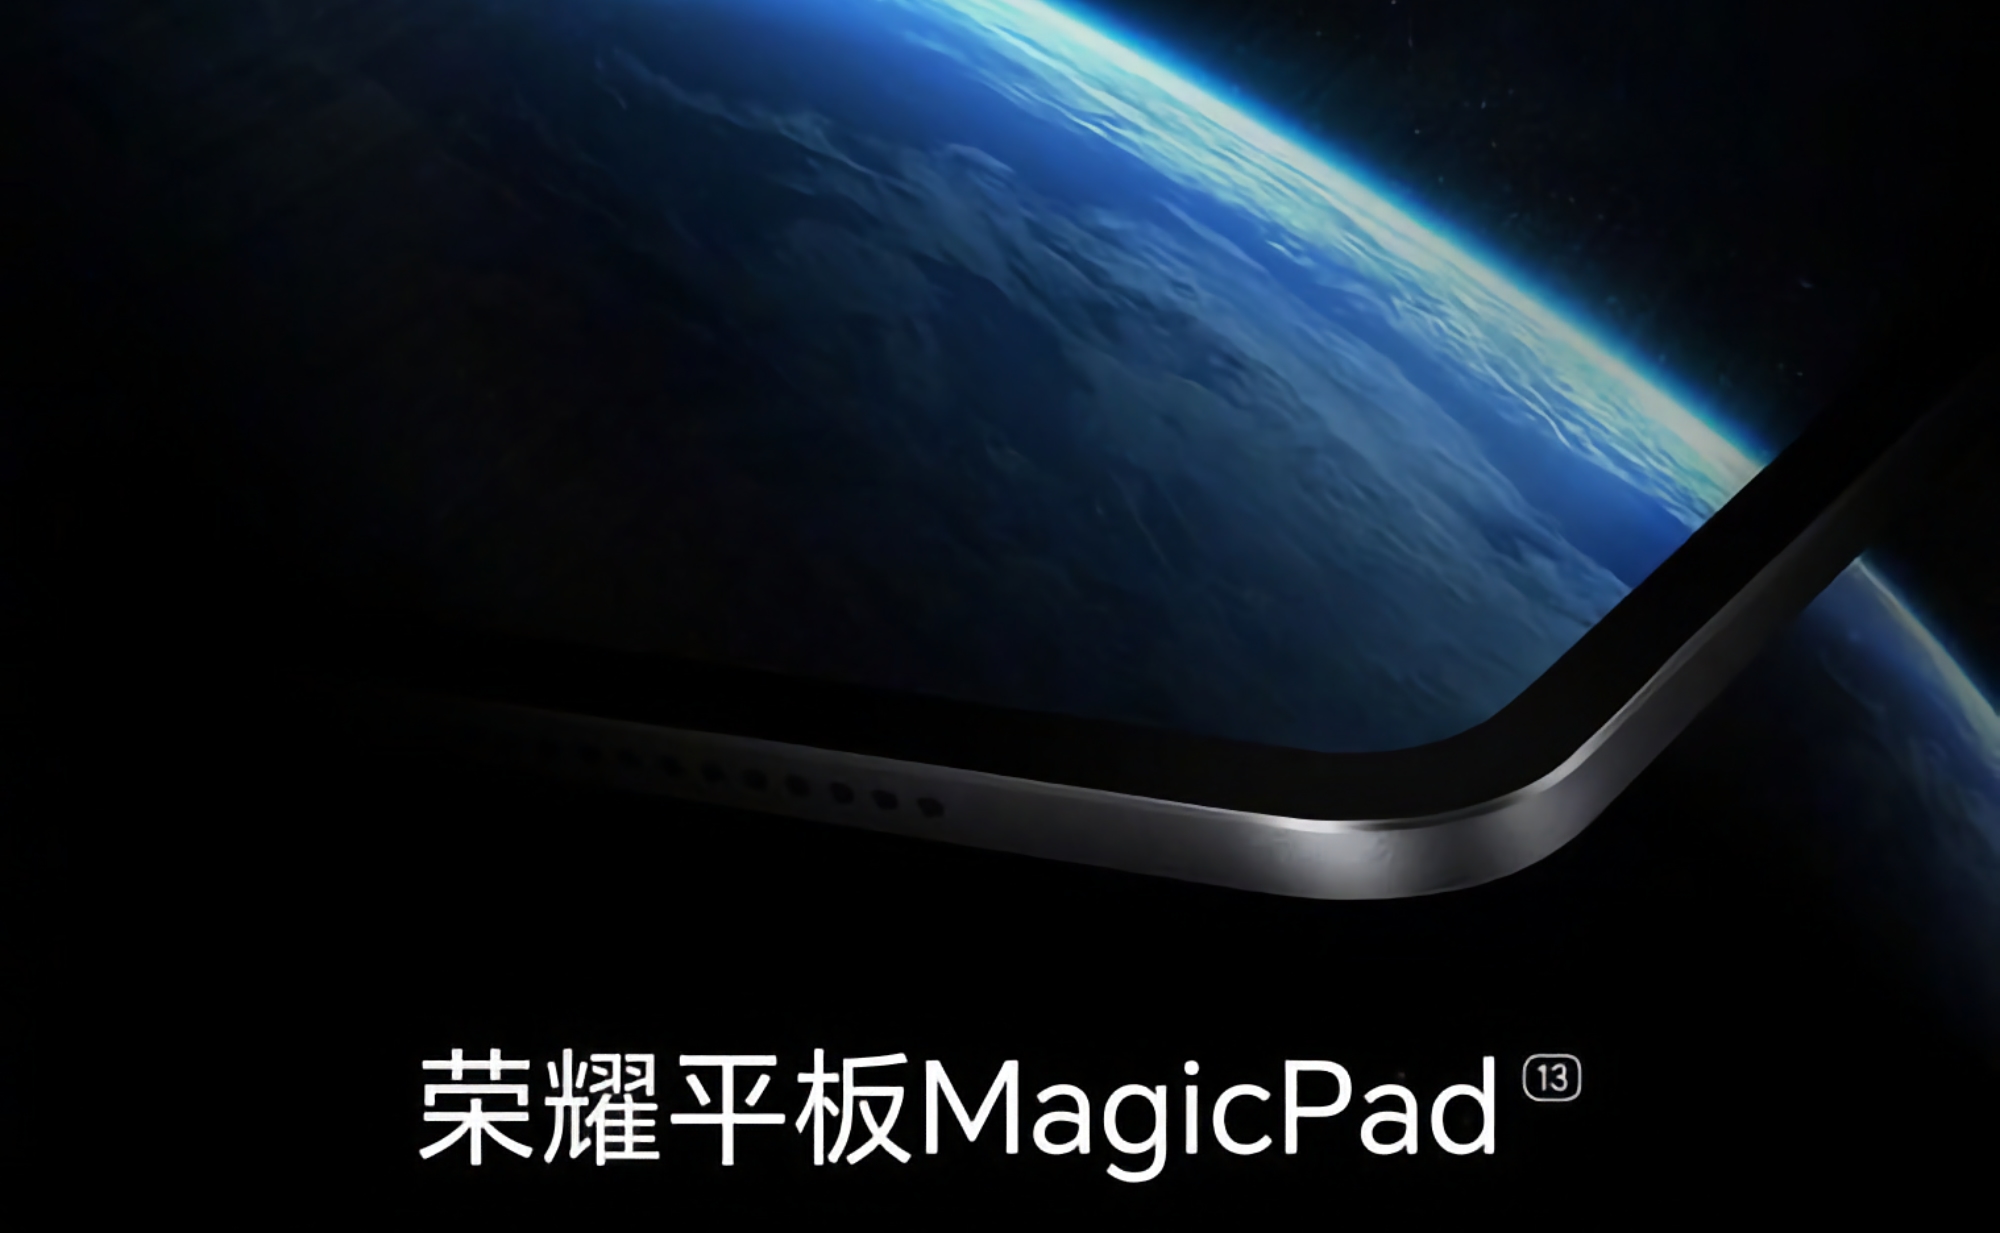 Niet alleen de opvouwbare Magic V2-smartphone: Honor onthult op 12 juli ook de MagicPad 13 tablet